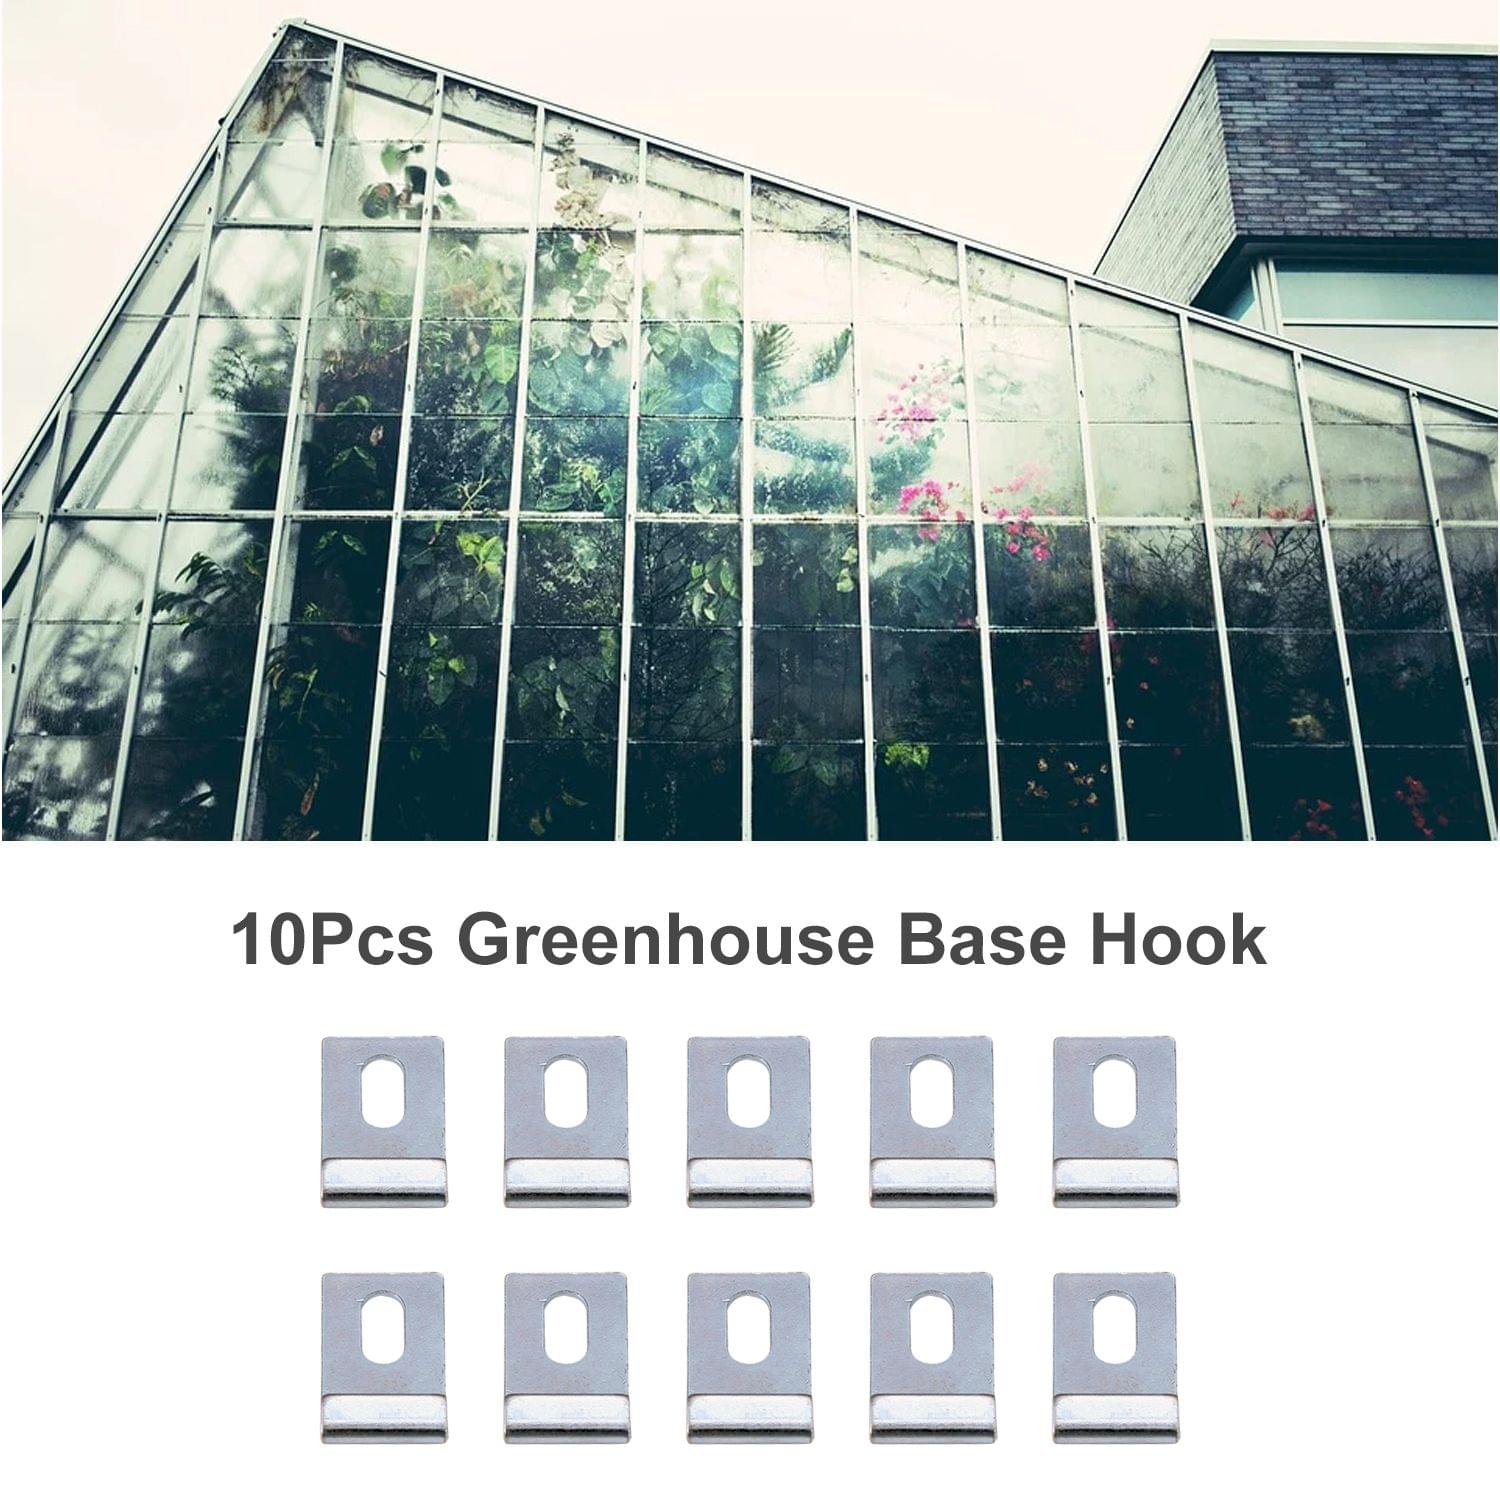 10Pcs Greenhouse Base Hook Replacement Kits J Shaped Clips